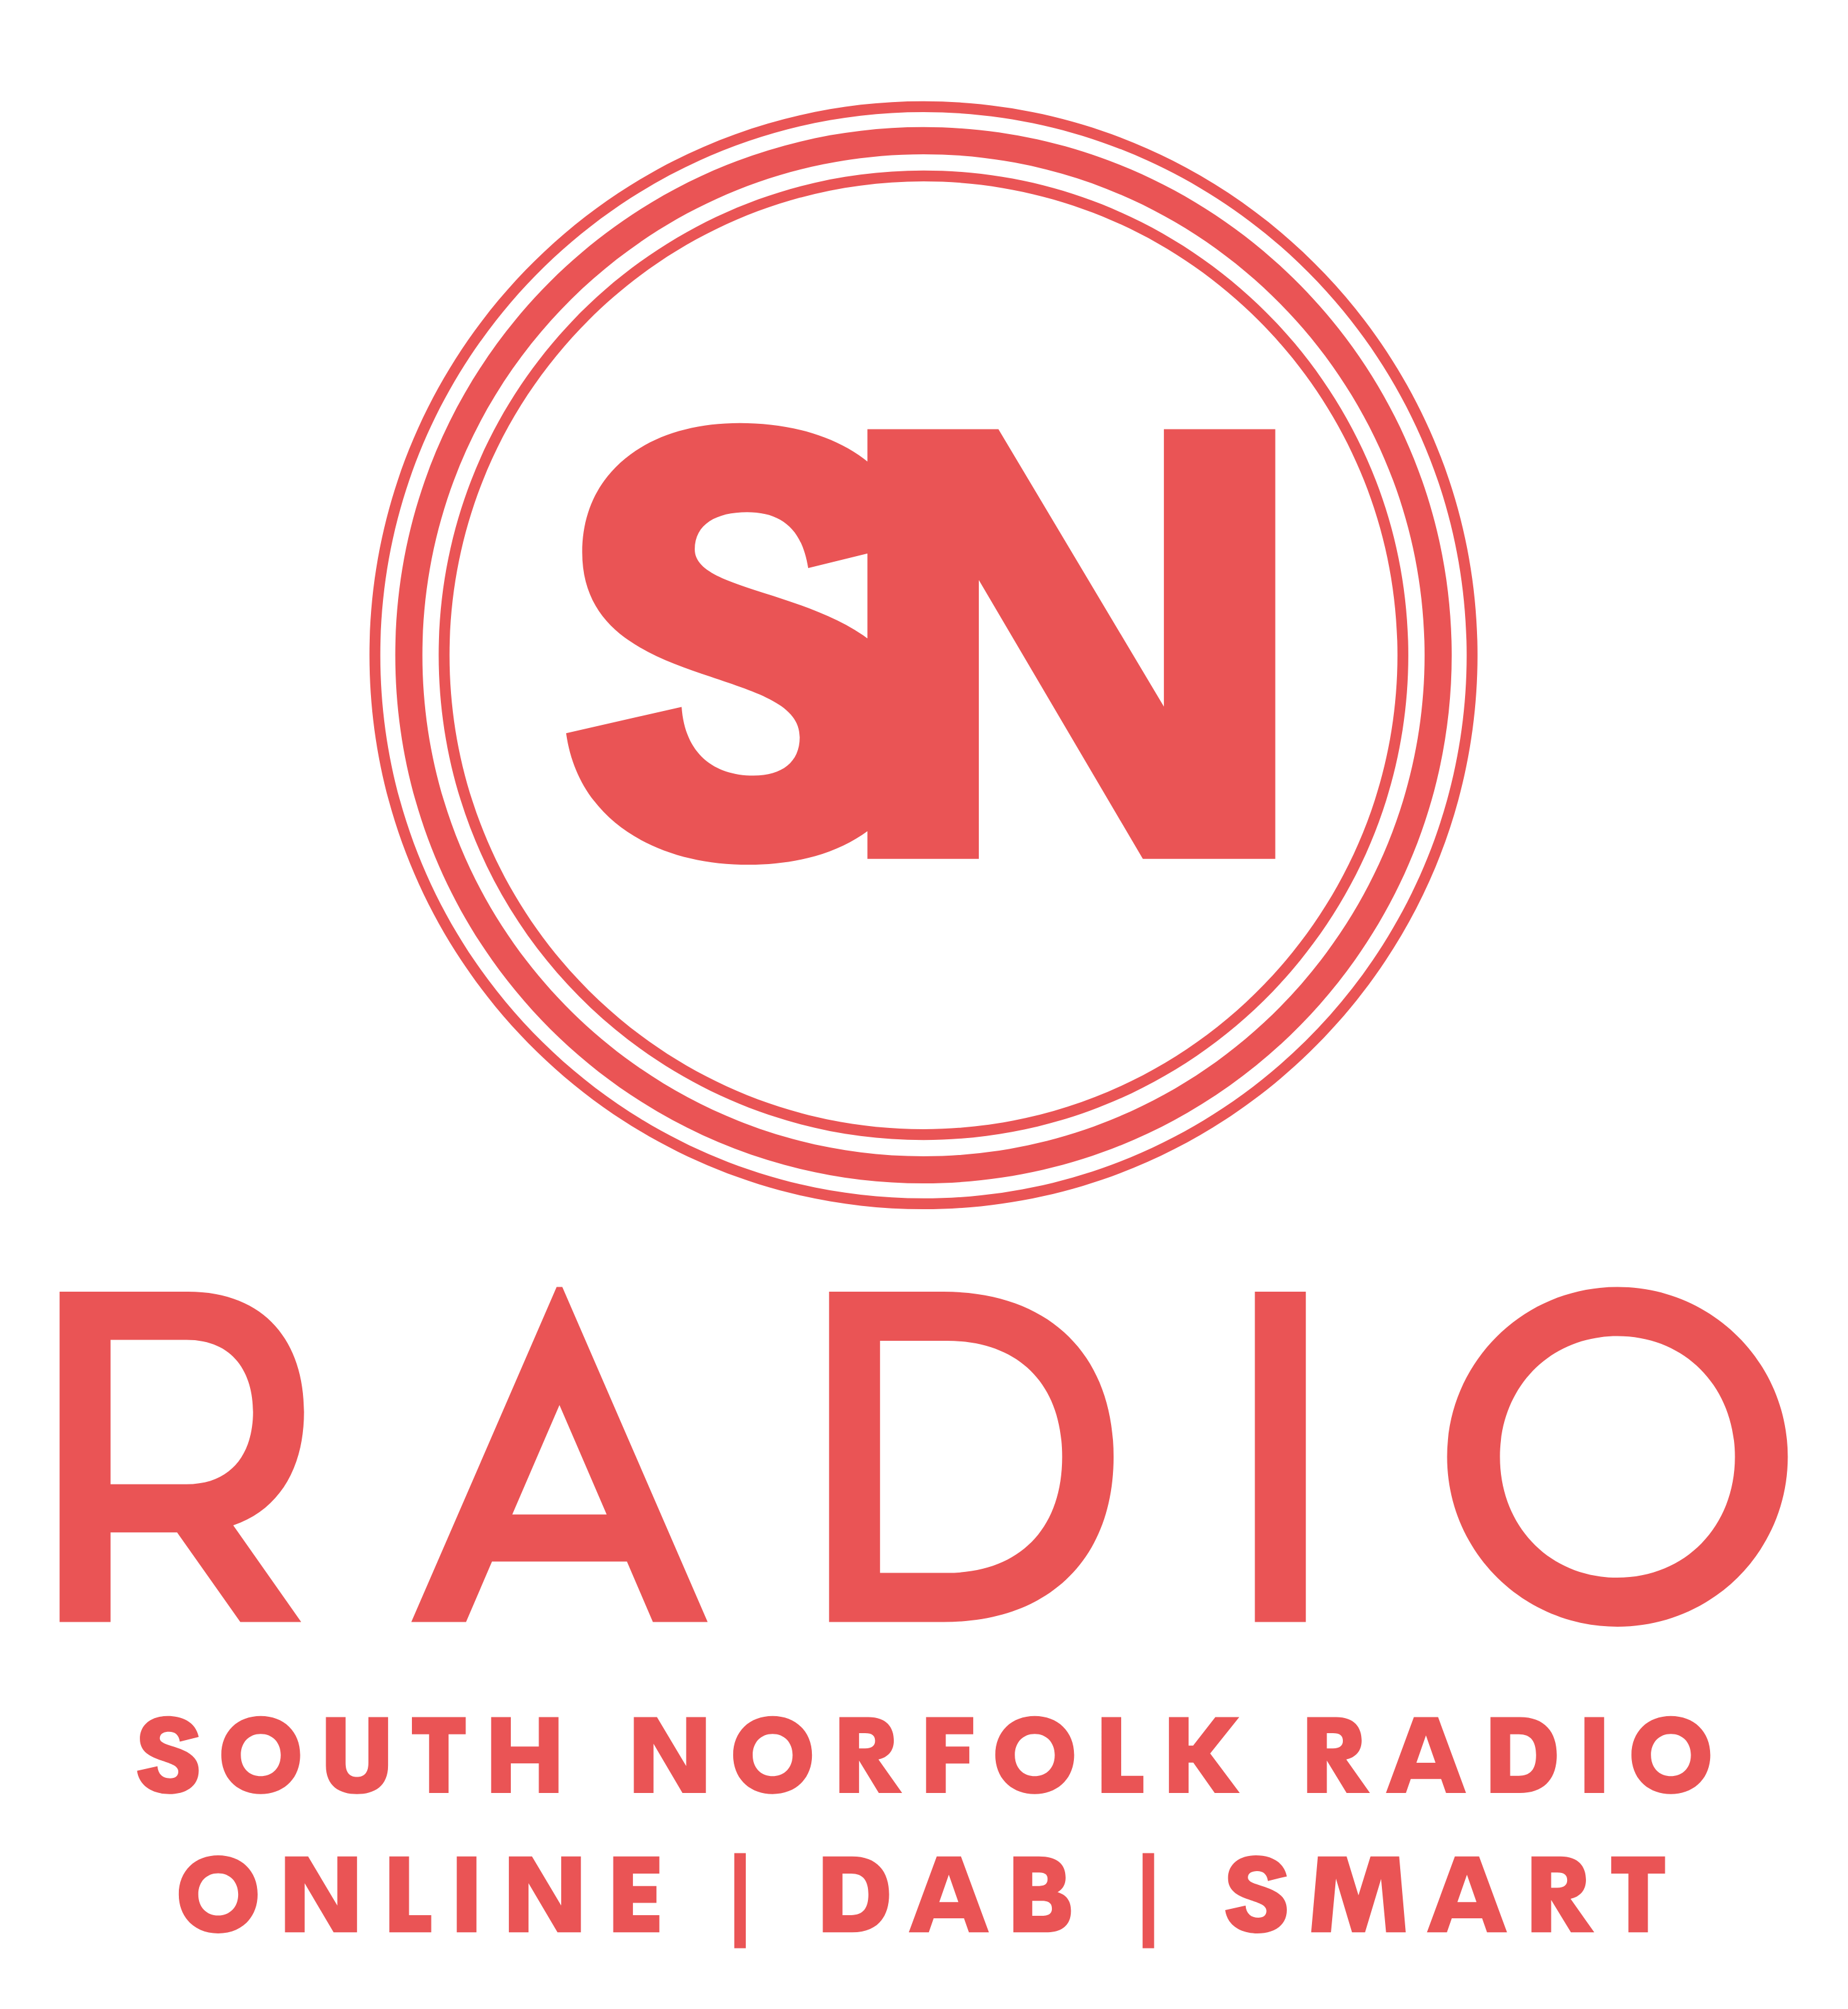 South Norfolk Radio